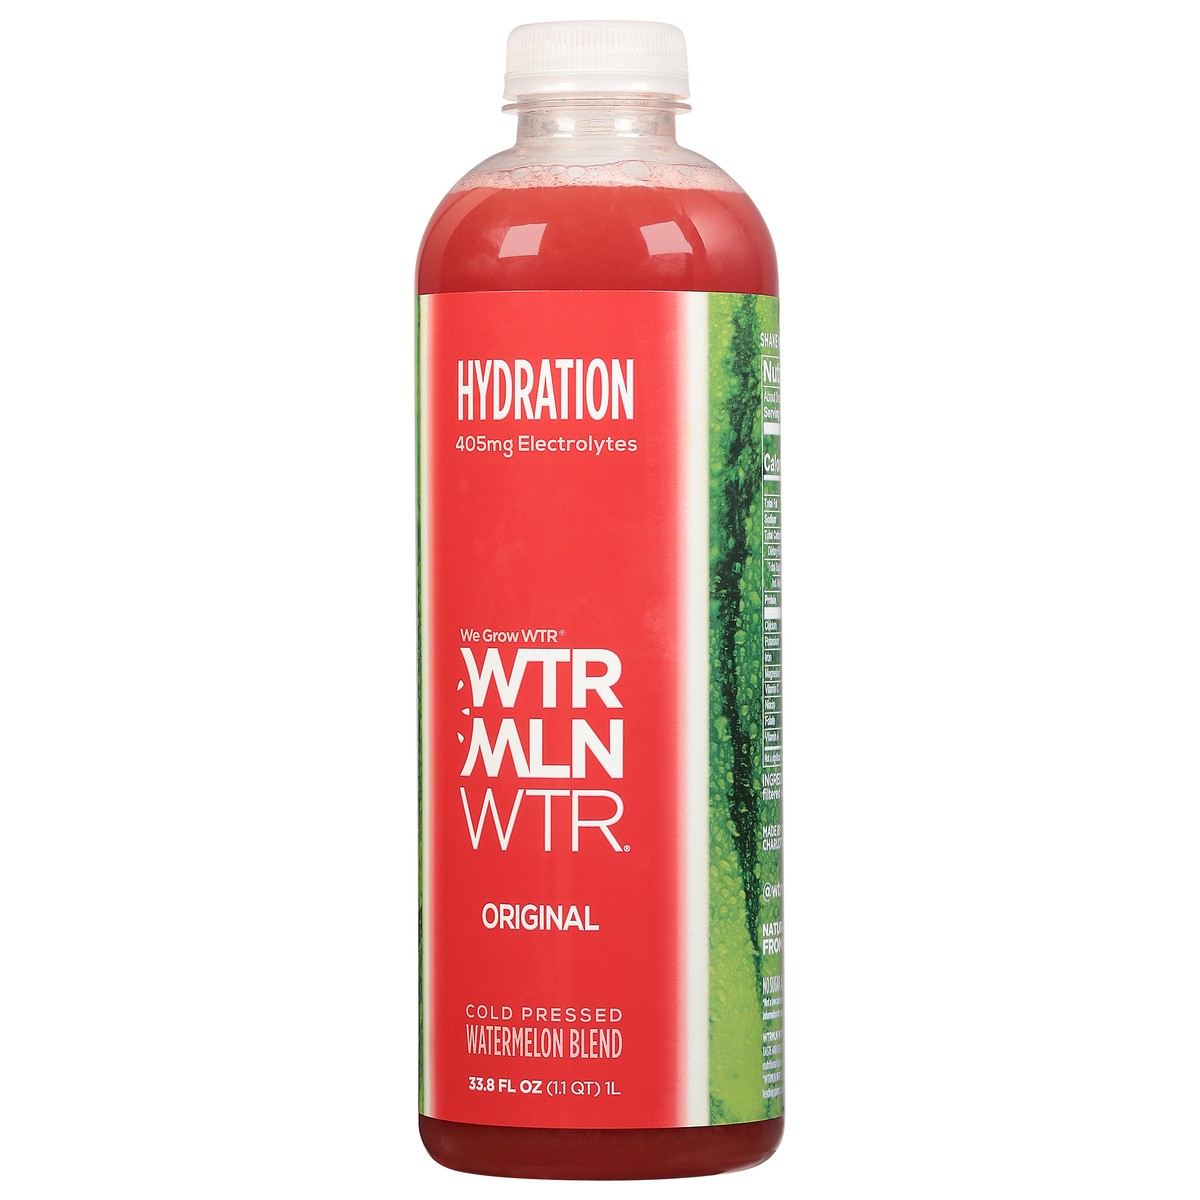 slide 3 of 9, WTRMLN WTR We Grow WTR Hydration Original Watermelon Blend 33.8 fl oz, 1 liter